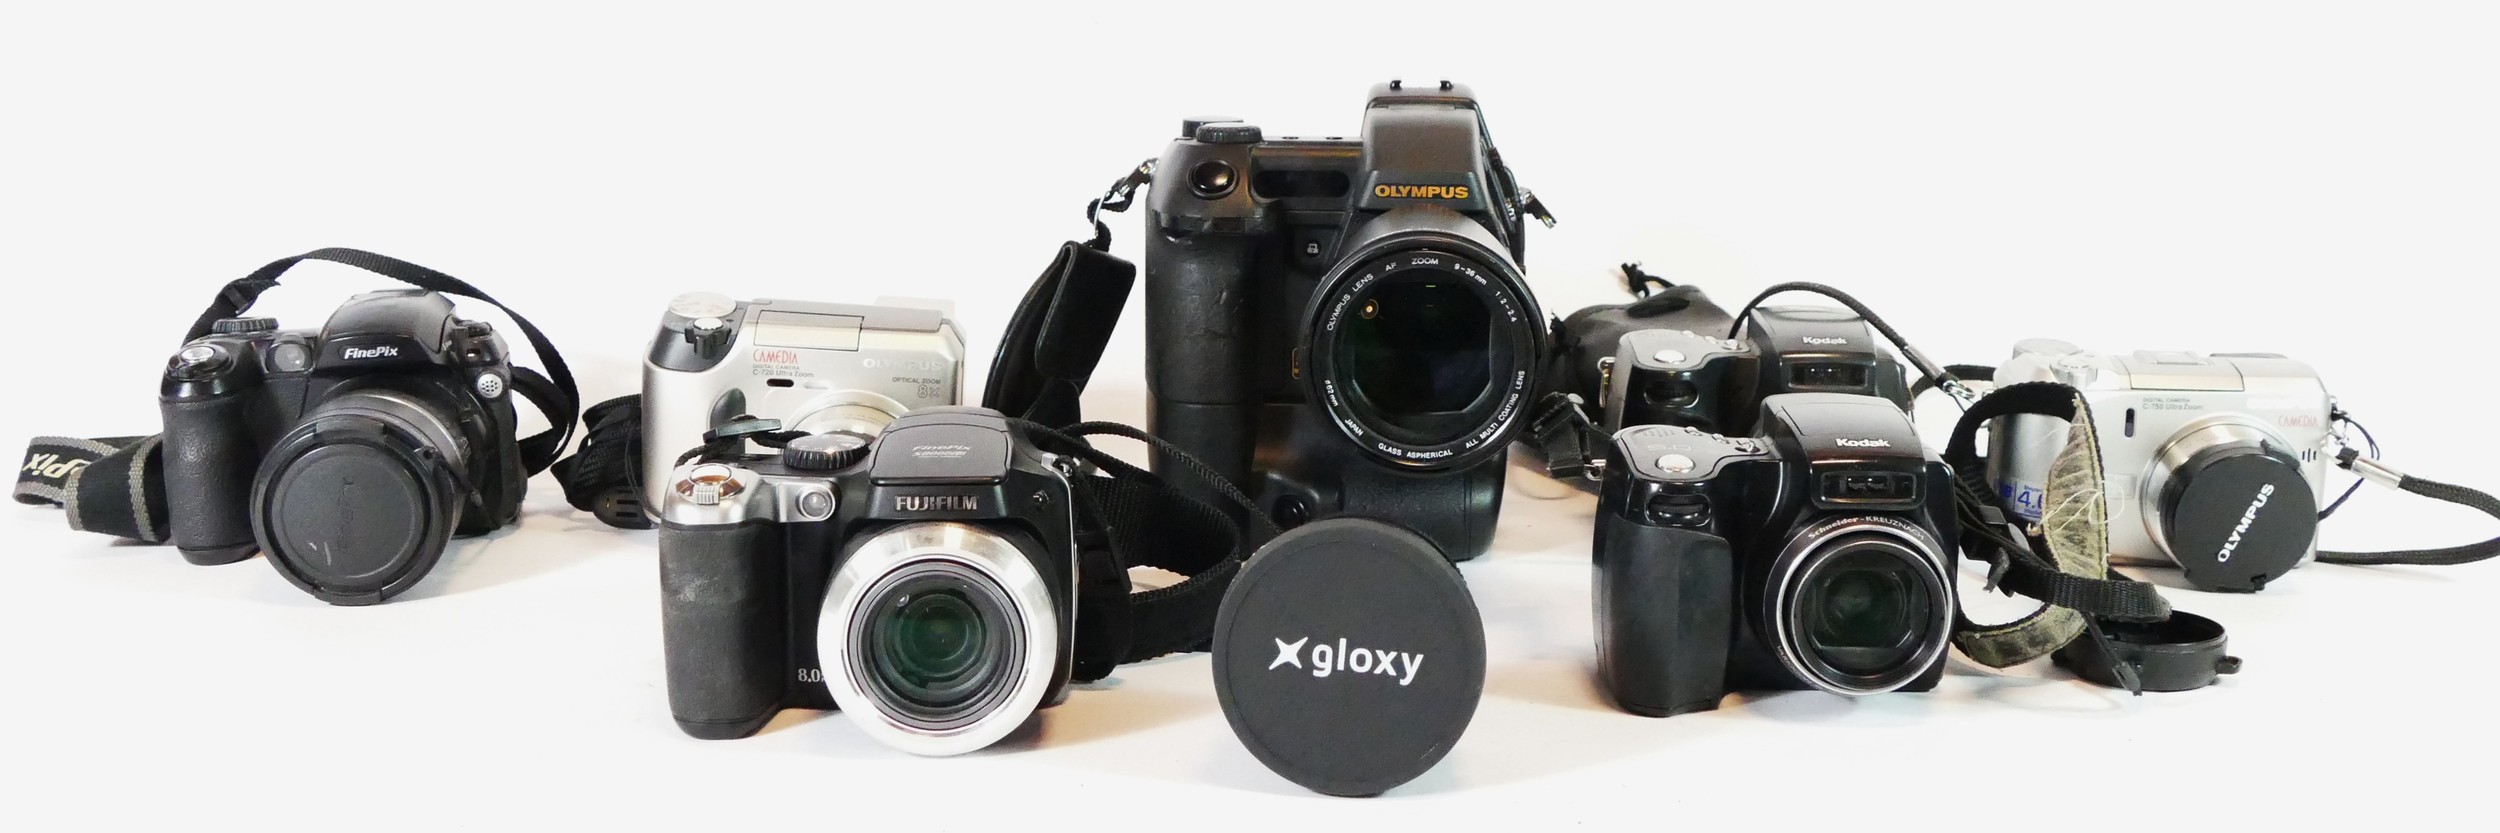 Seven bridge cameras, to include a Olympus E-Zop, a Kodak 27590, a Kodak DX6490, a Fujifilm 55000, a